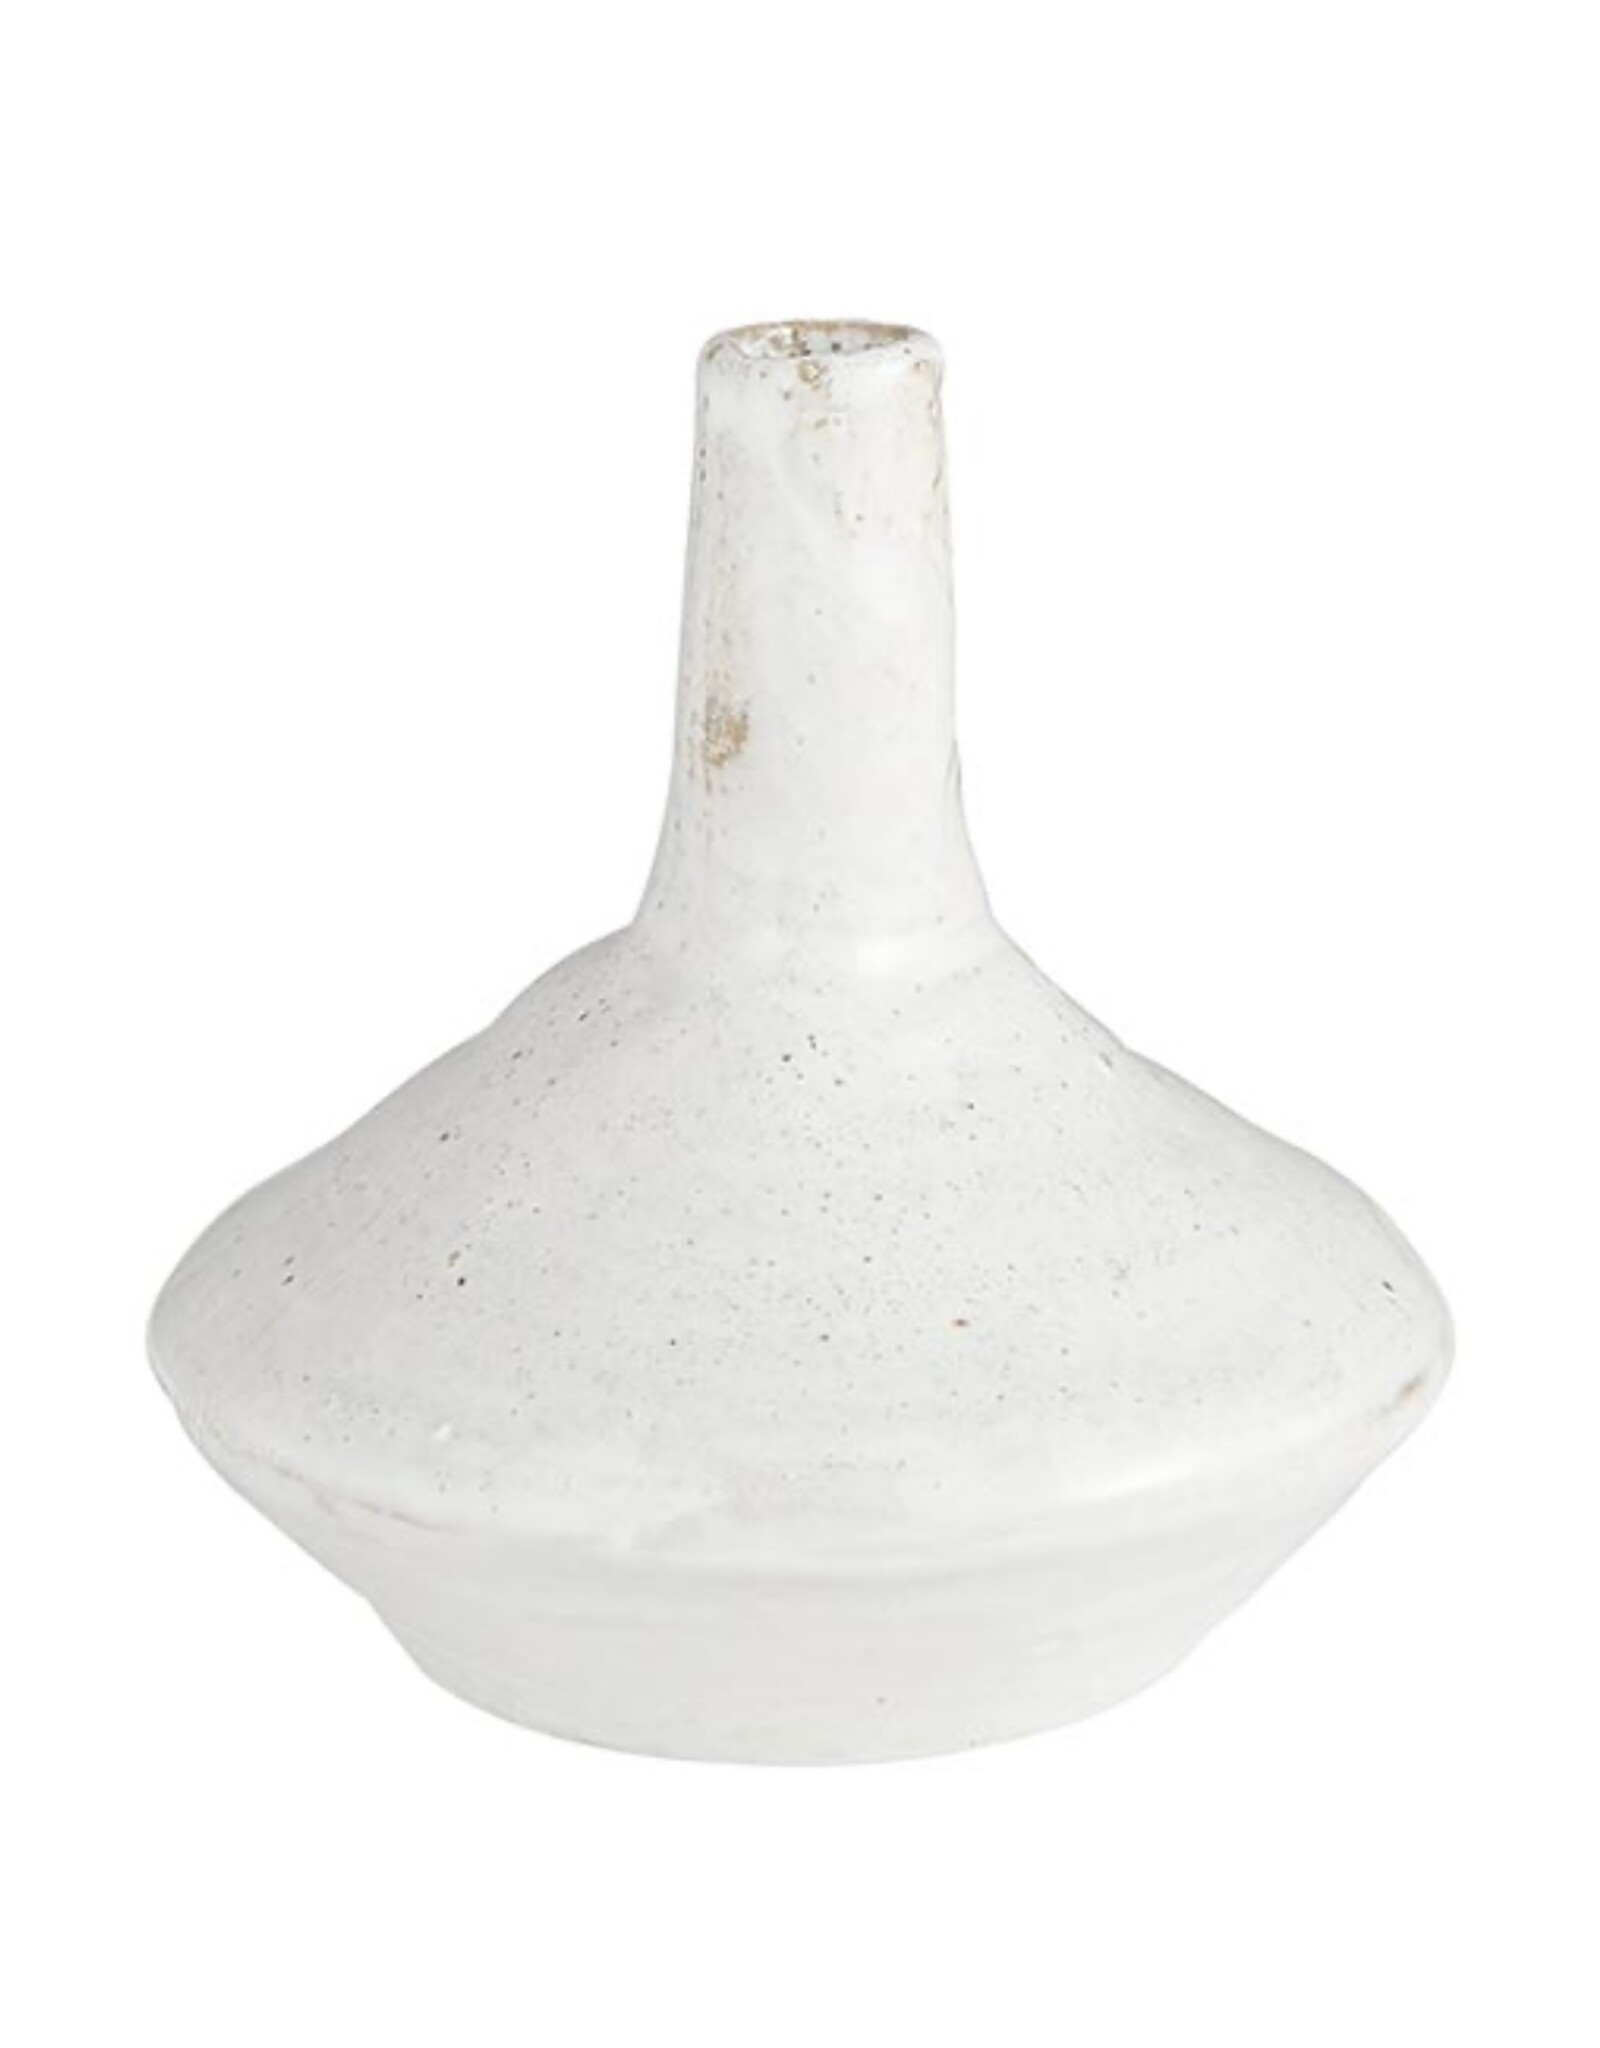 Santa Barbara Designs Organic ceramic vase - pointed top